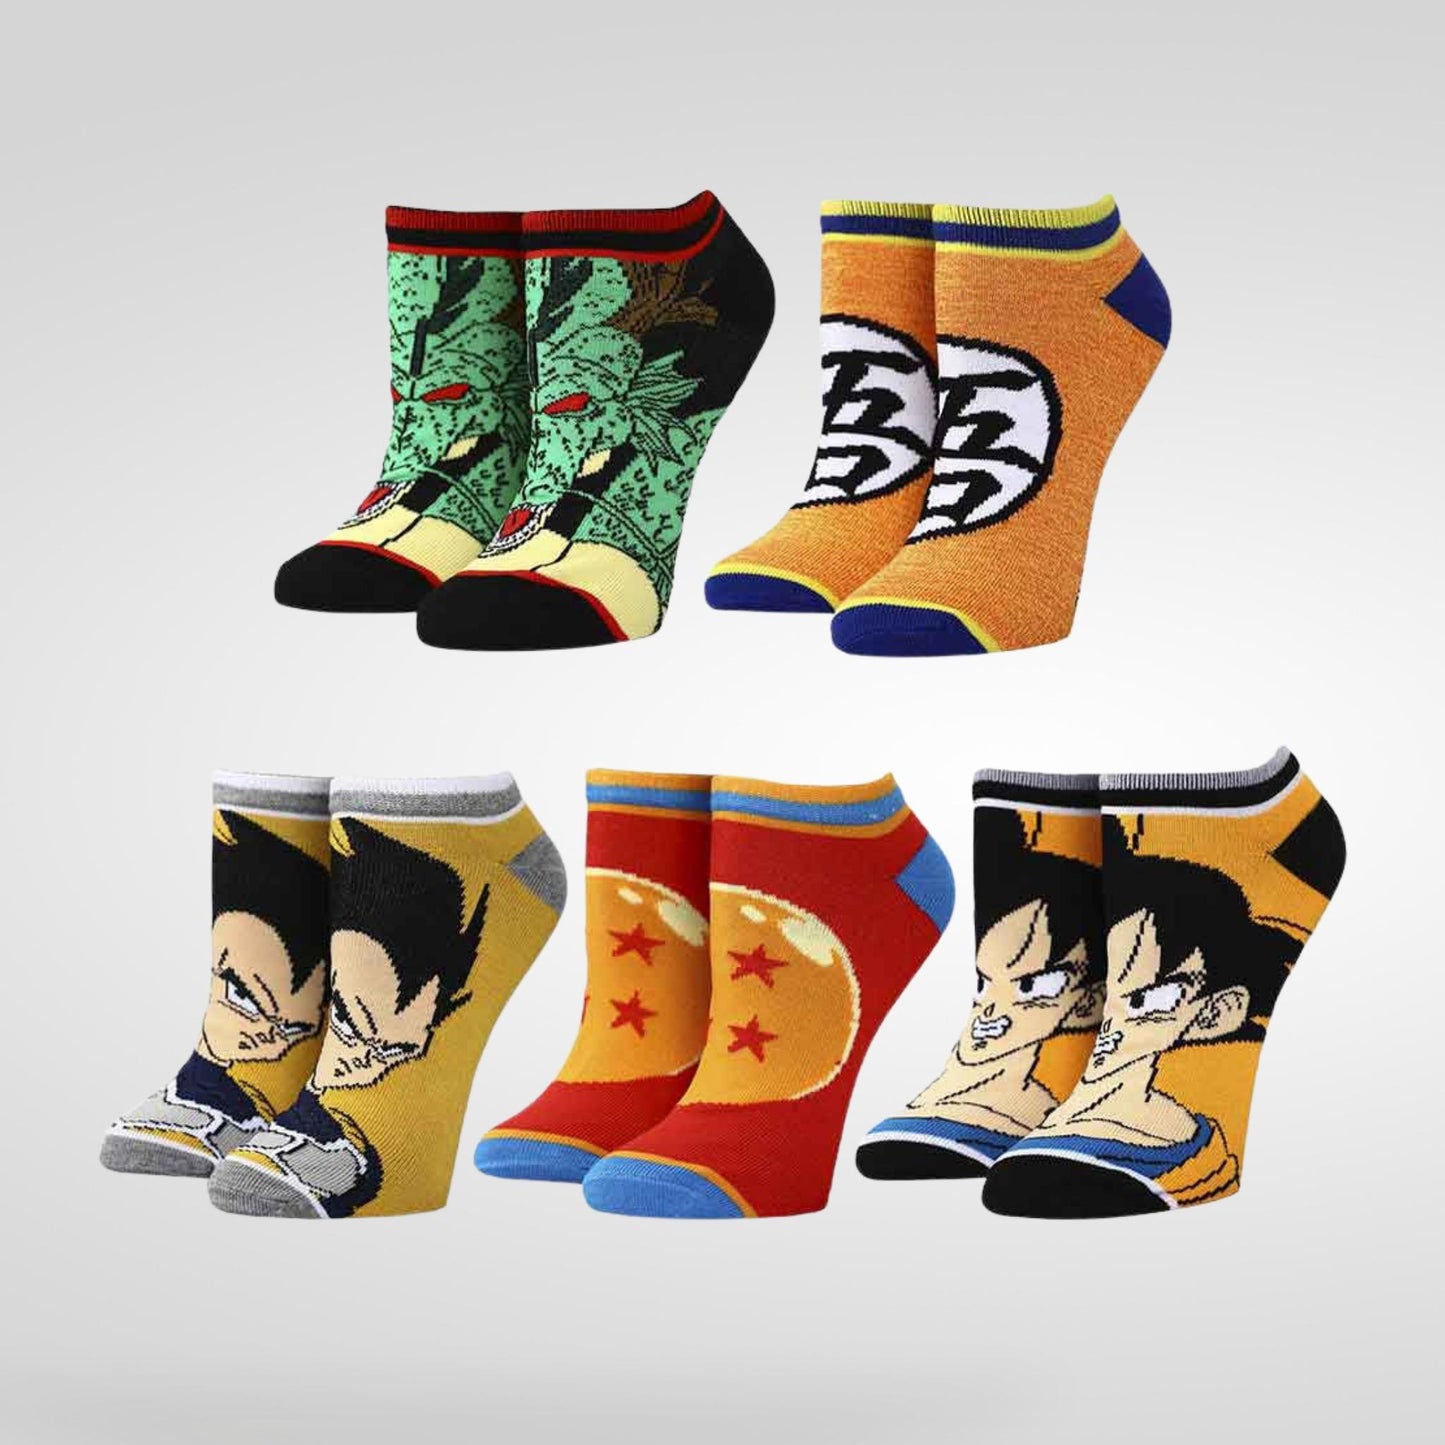 Characters & Symbols (Dragon Ball Super: Broly) Ankle Socks 5 Pair Set